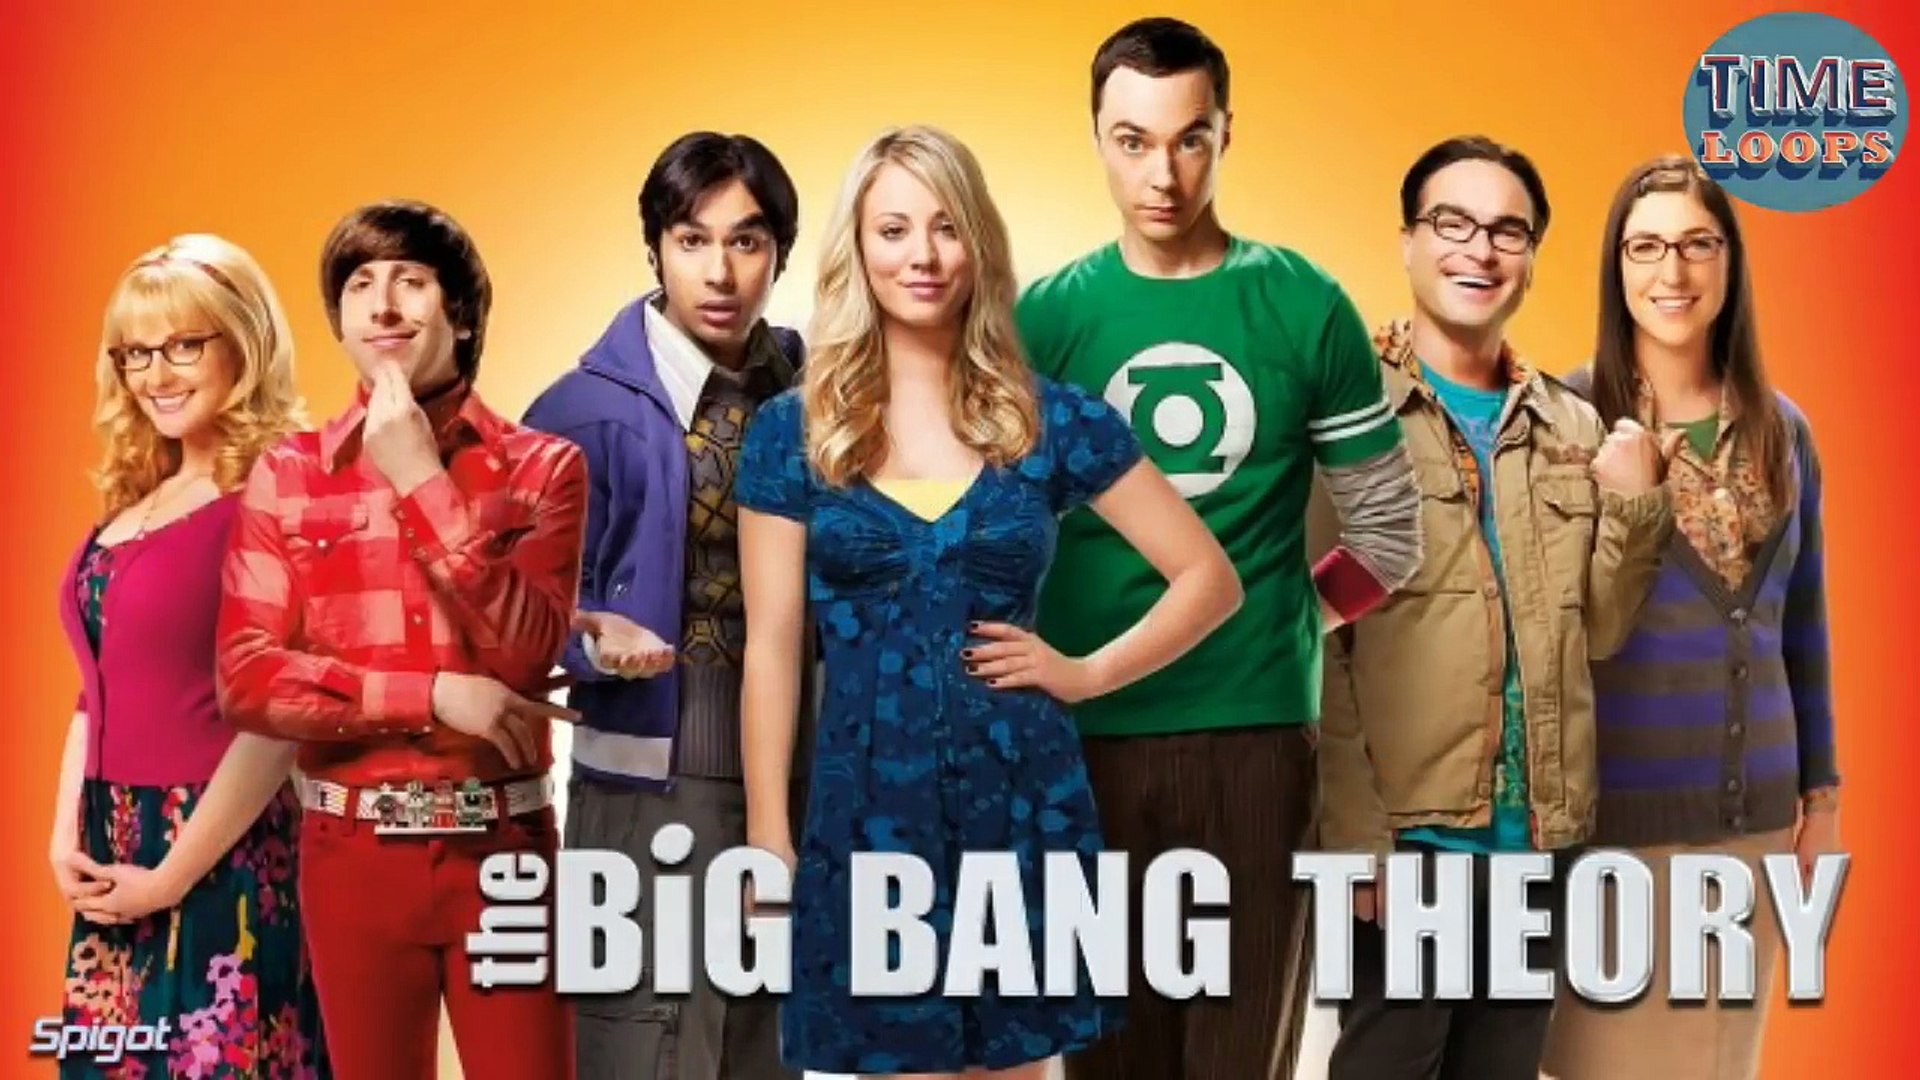 The Big Bang Theory Real Name and Age